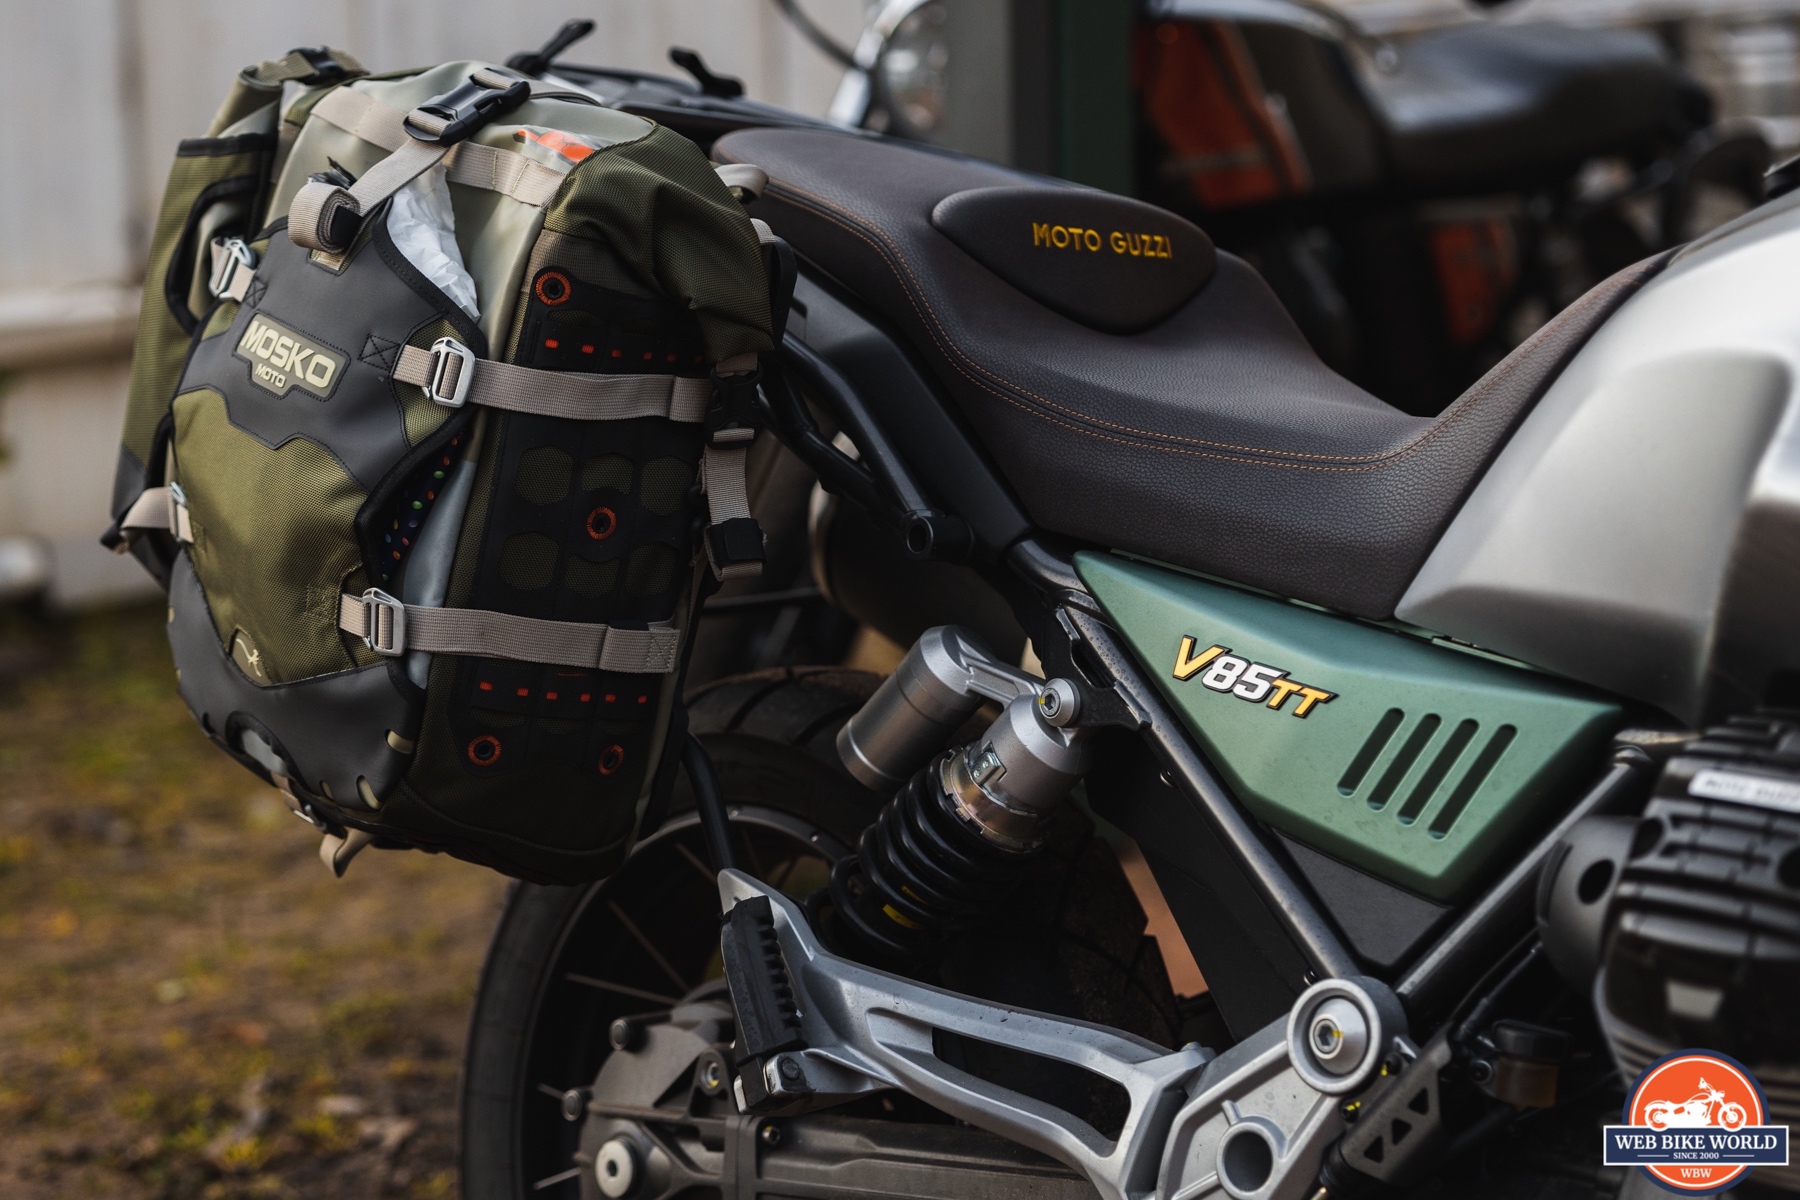 Detail photo of a 2021 Moto Guzzi V85TT Centenario right hand side cover and Mosko Moto Backcountry pannier